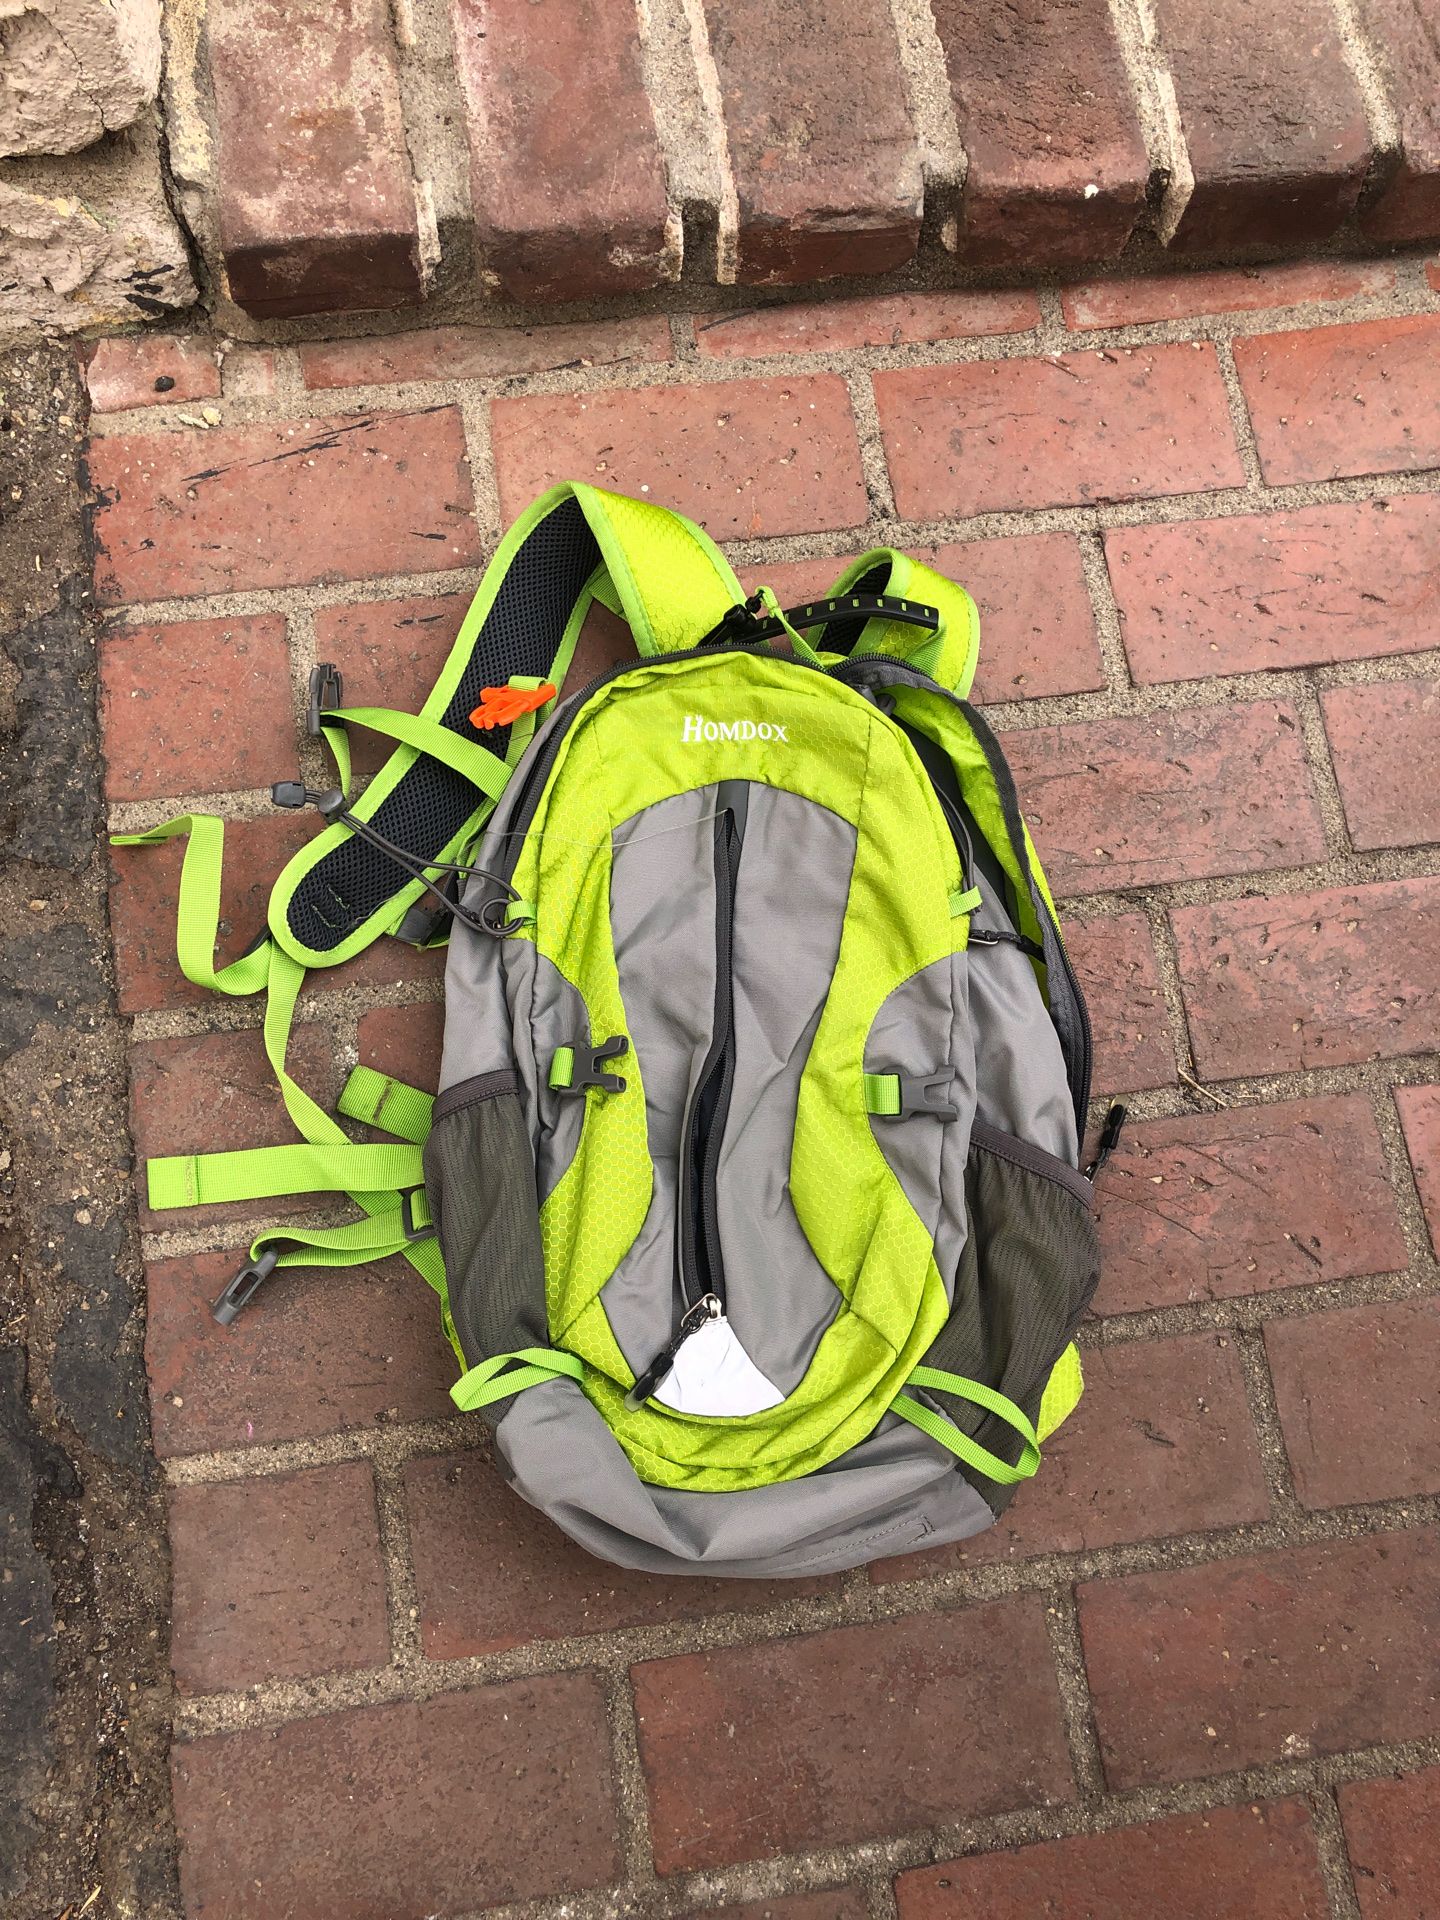 Homdox hiking backpack hardly used